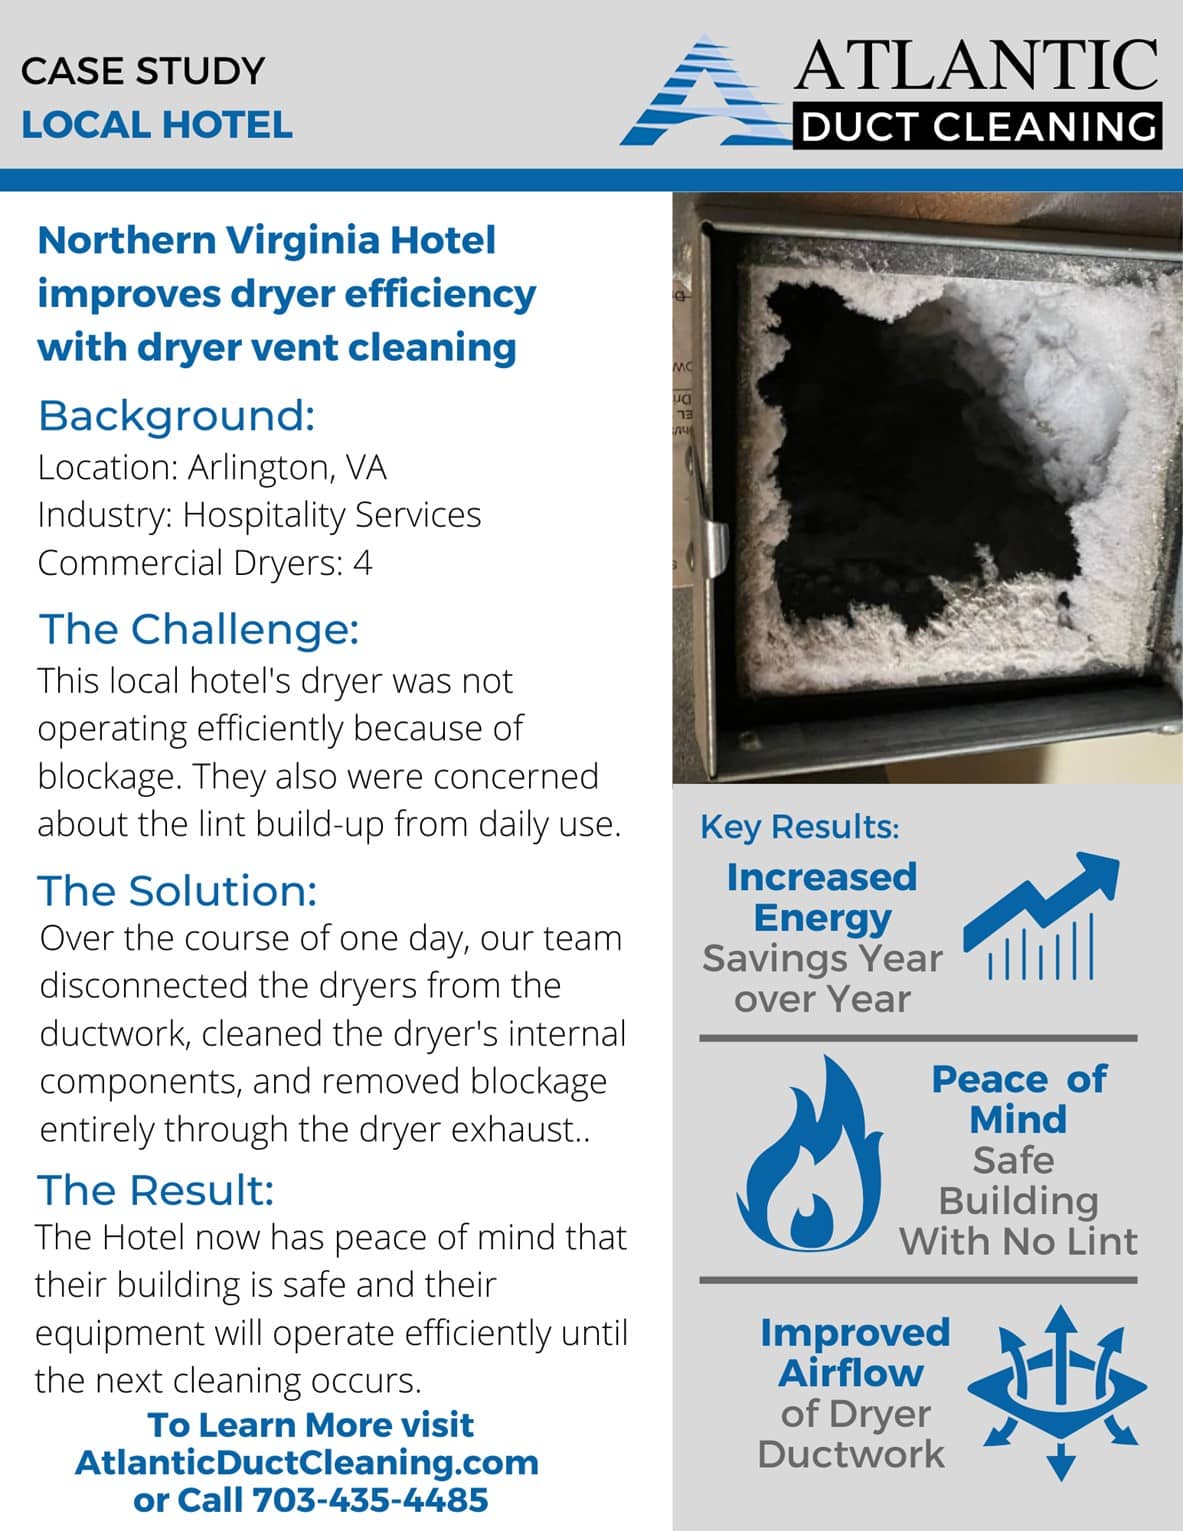 Nothern Virginia Hotel Case Study